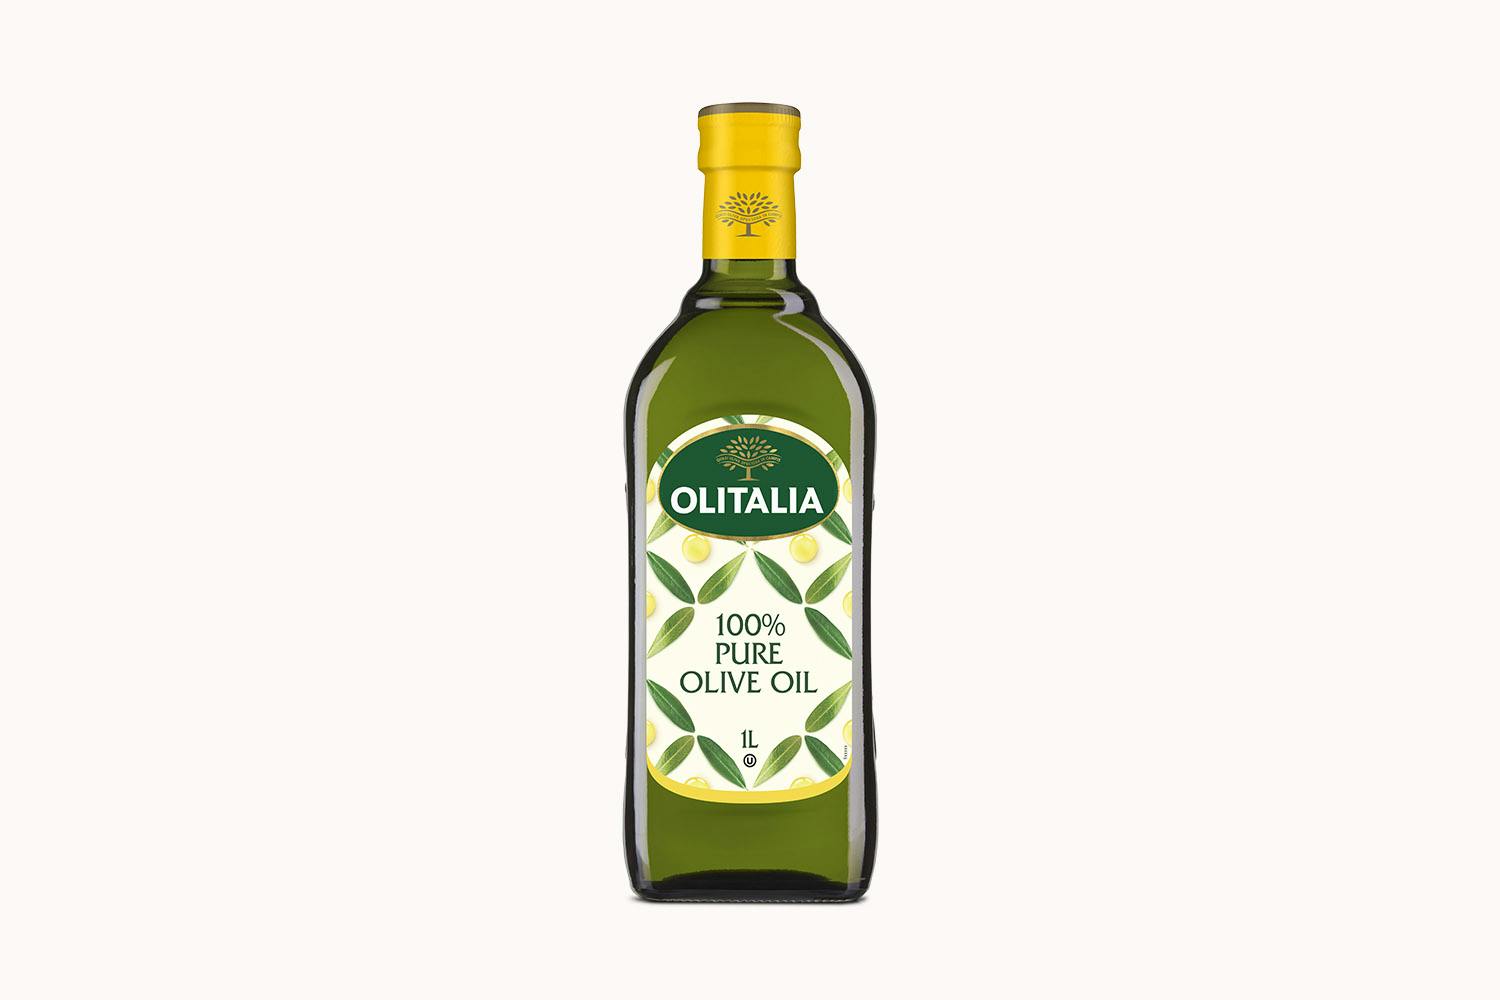 Olitalia Pure Olive Oil